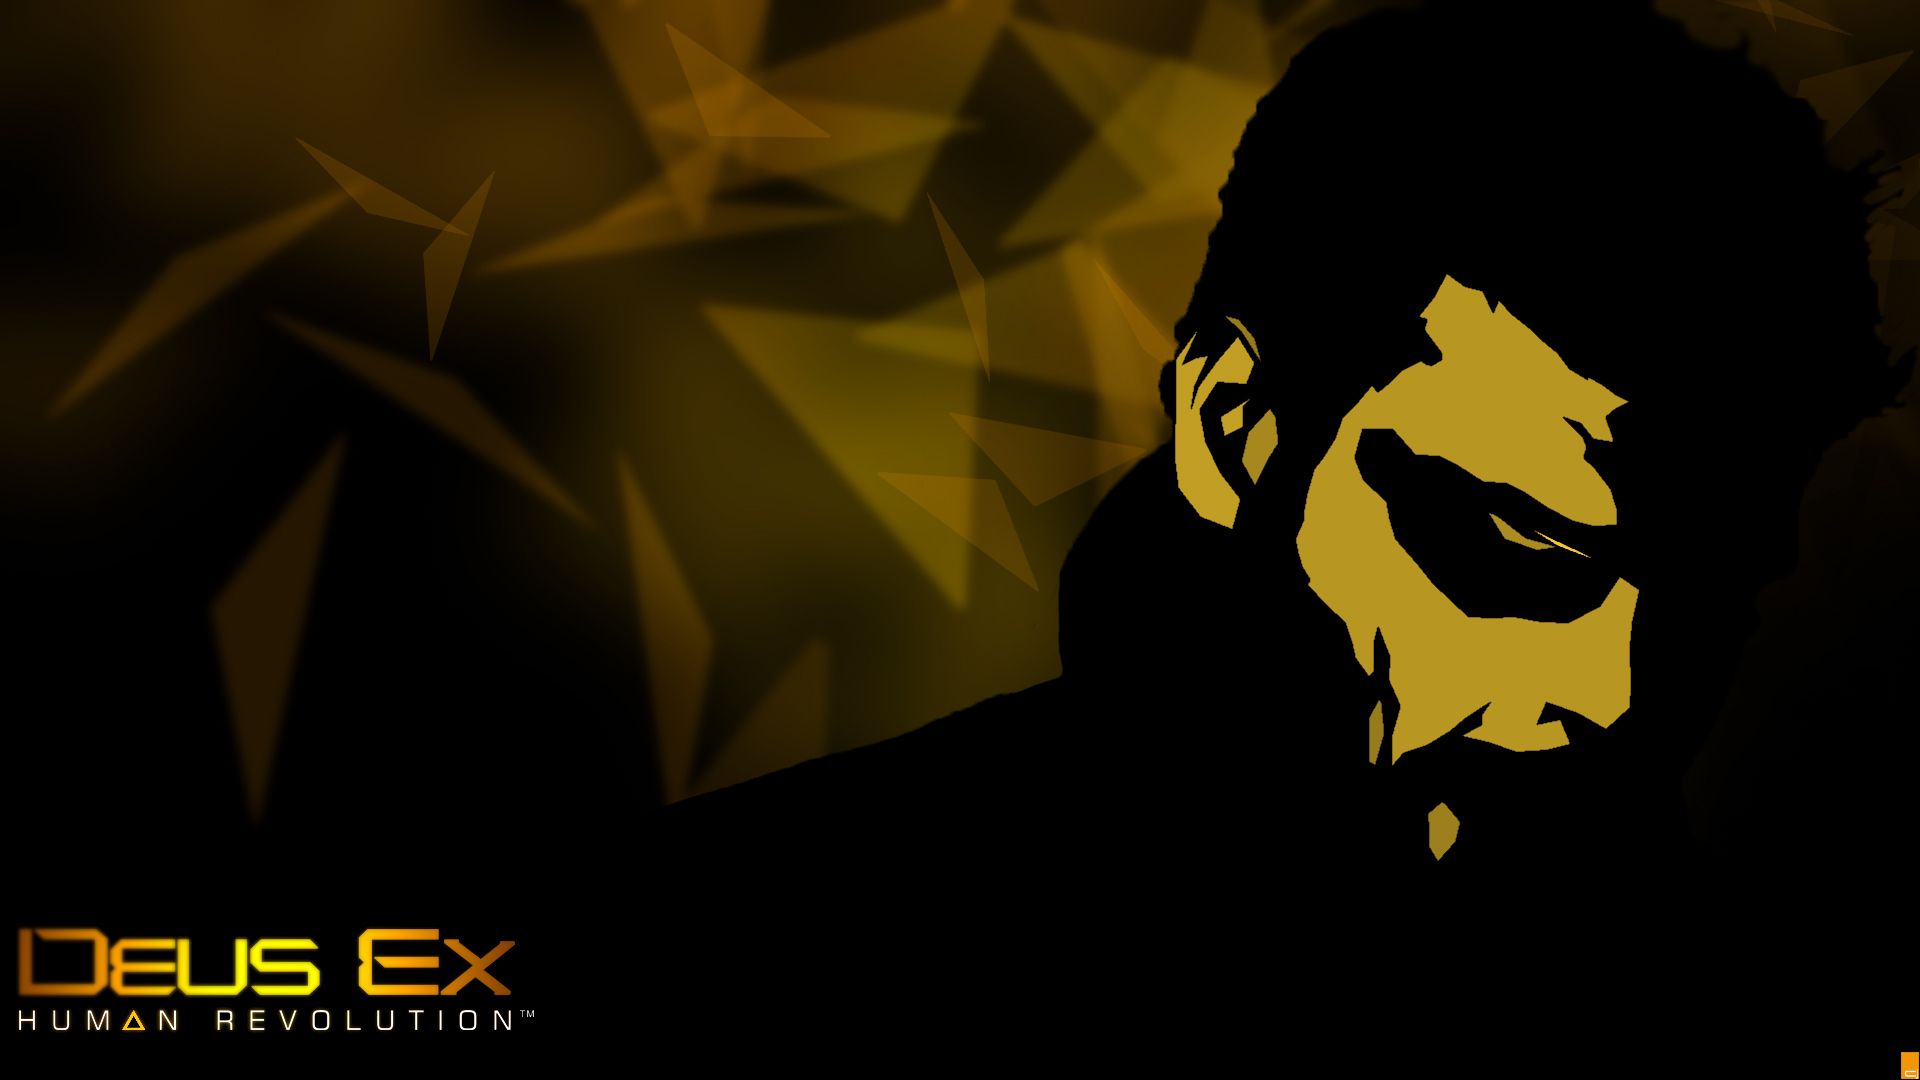 Deus Ex: Human Revolution: new wallpaper HD wallpapers and images ...